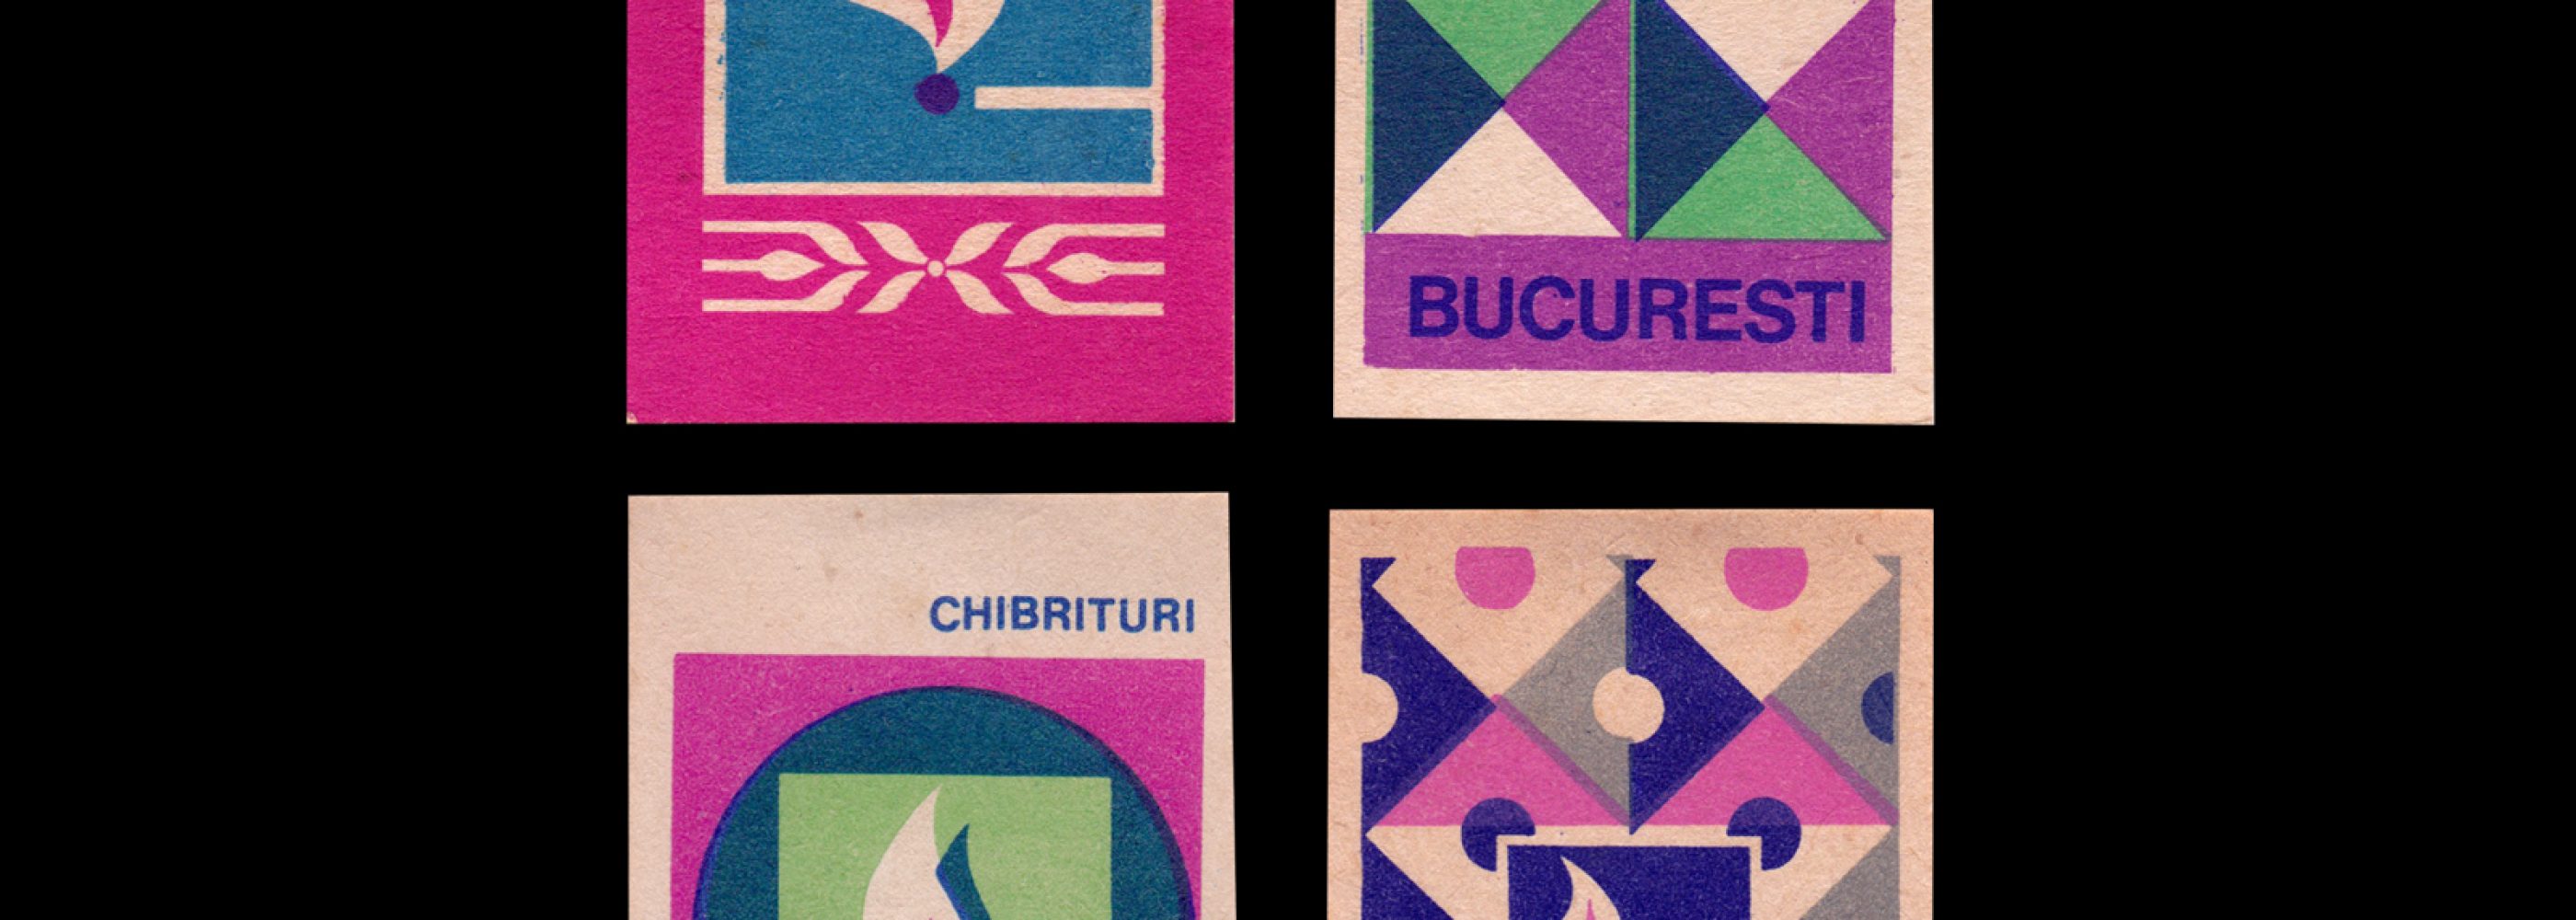 Chibrituri Bucuresti Romanian matchbox labels